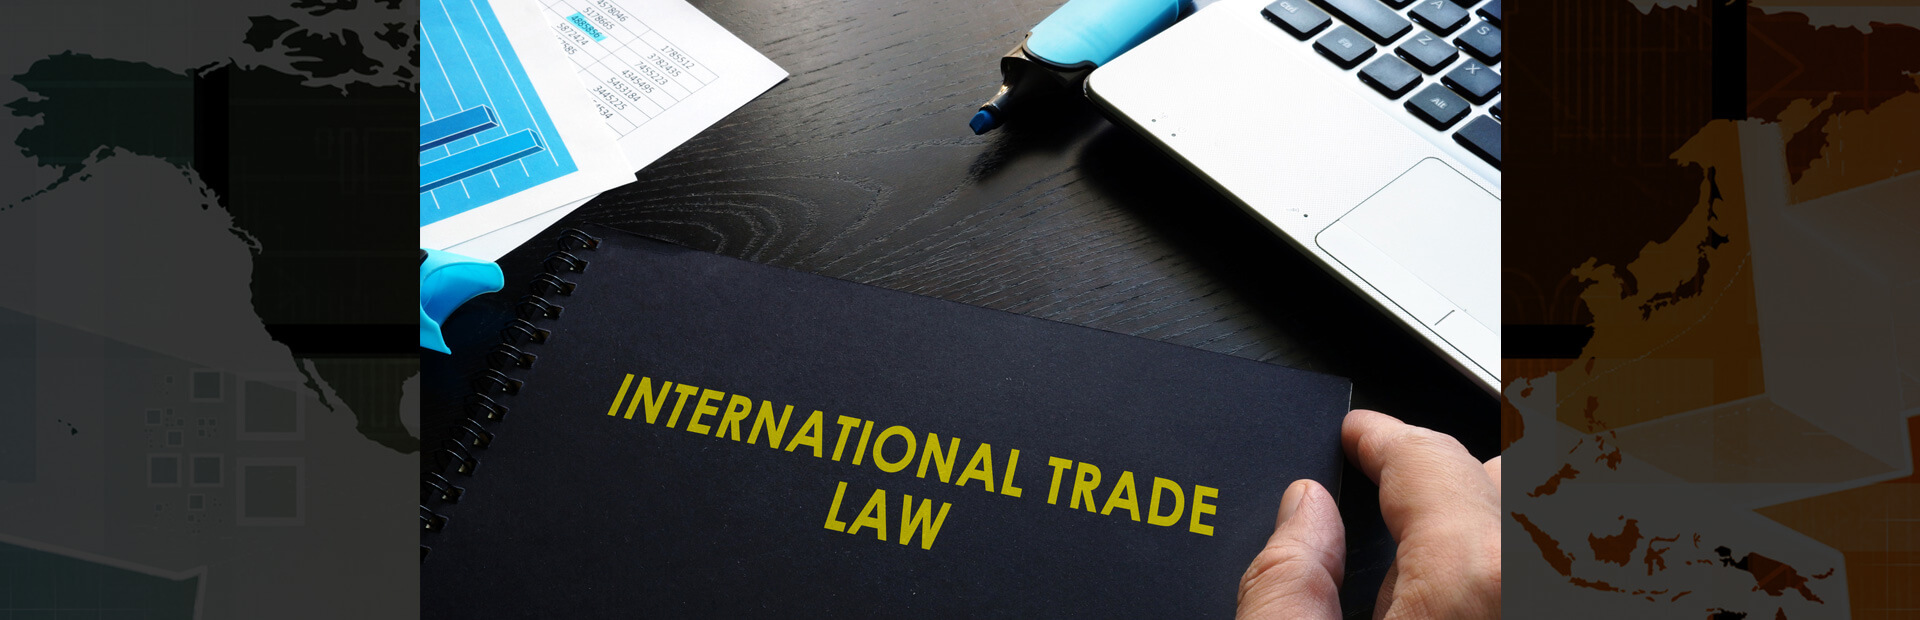 International Trade Laws Expert